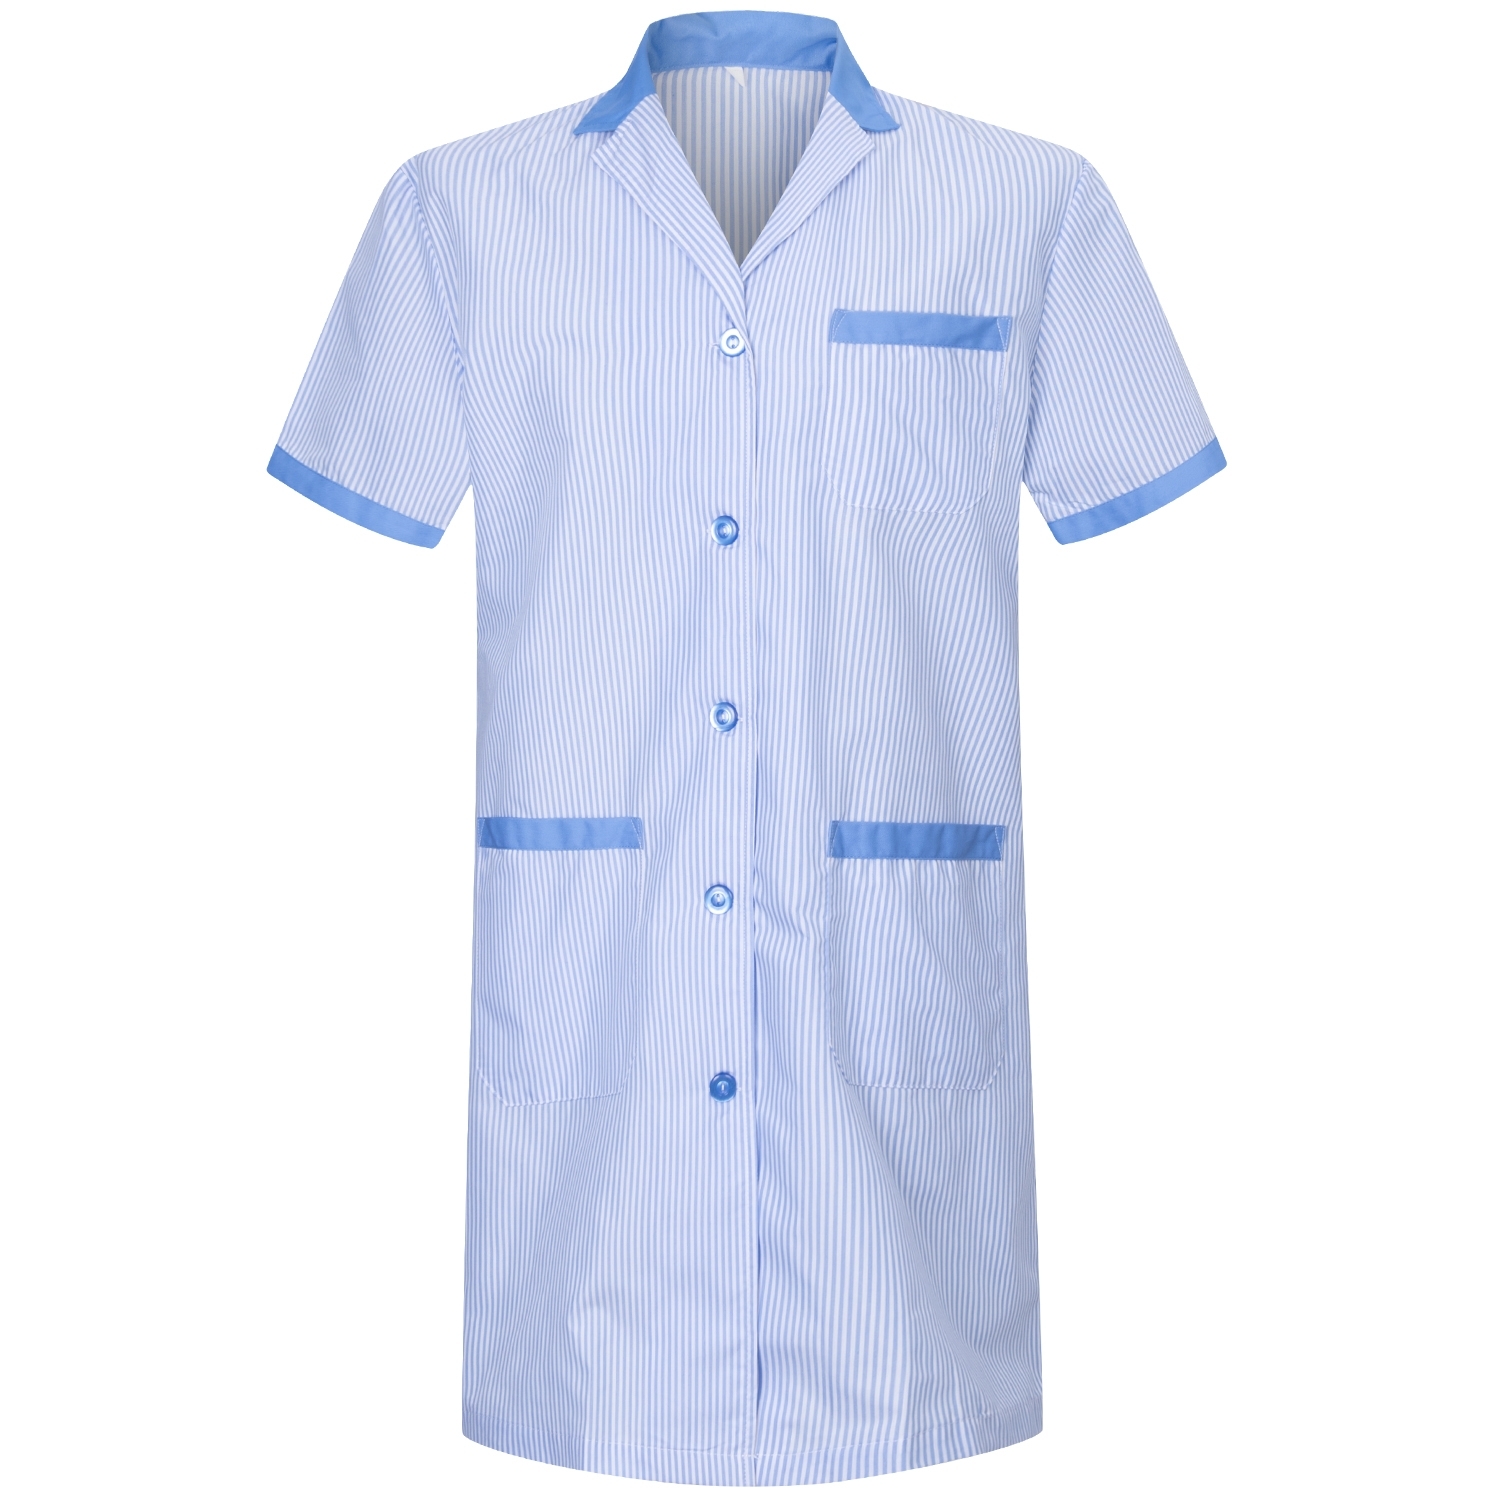 MISEMIYA Pack*2-Camisa Camisetas Mujer Medica Mangas Cortas Uniforme Laboral Sanitarios Hospital Limpieza Ref.T820